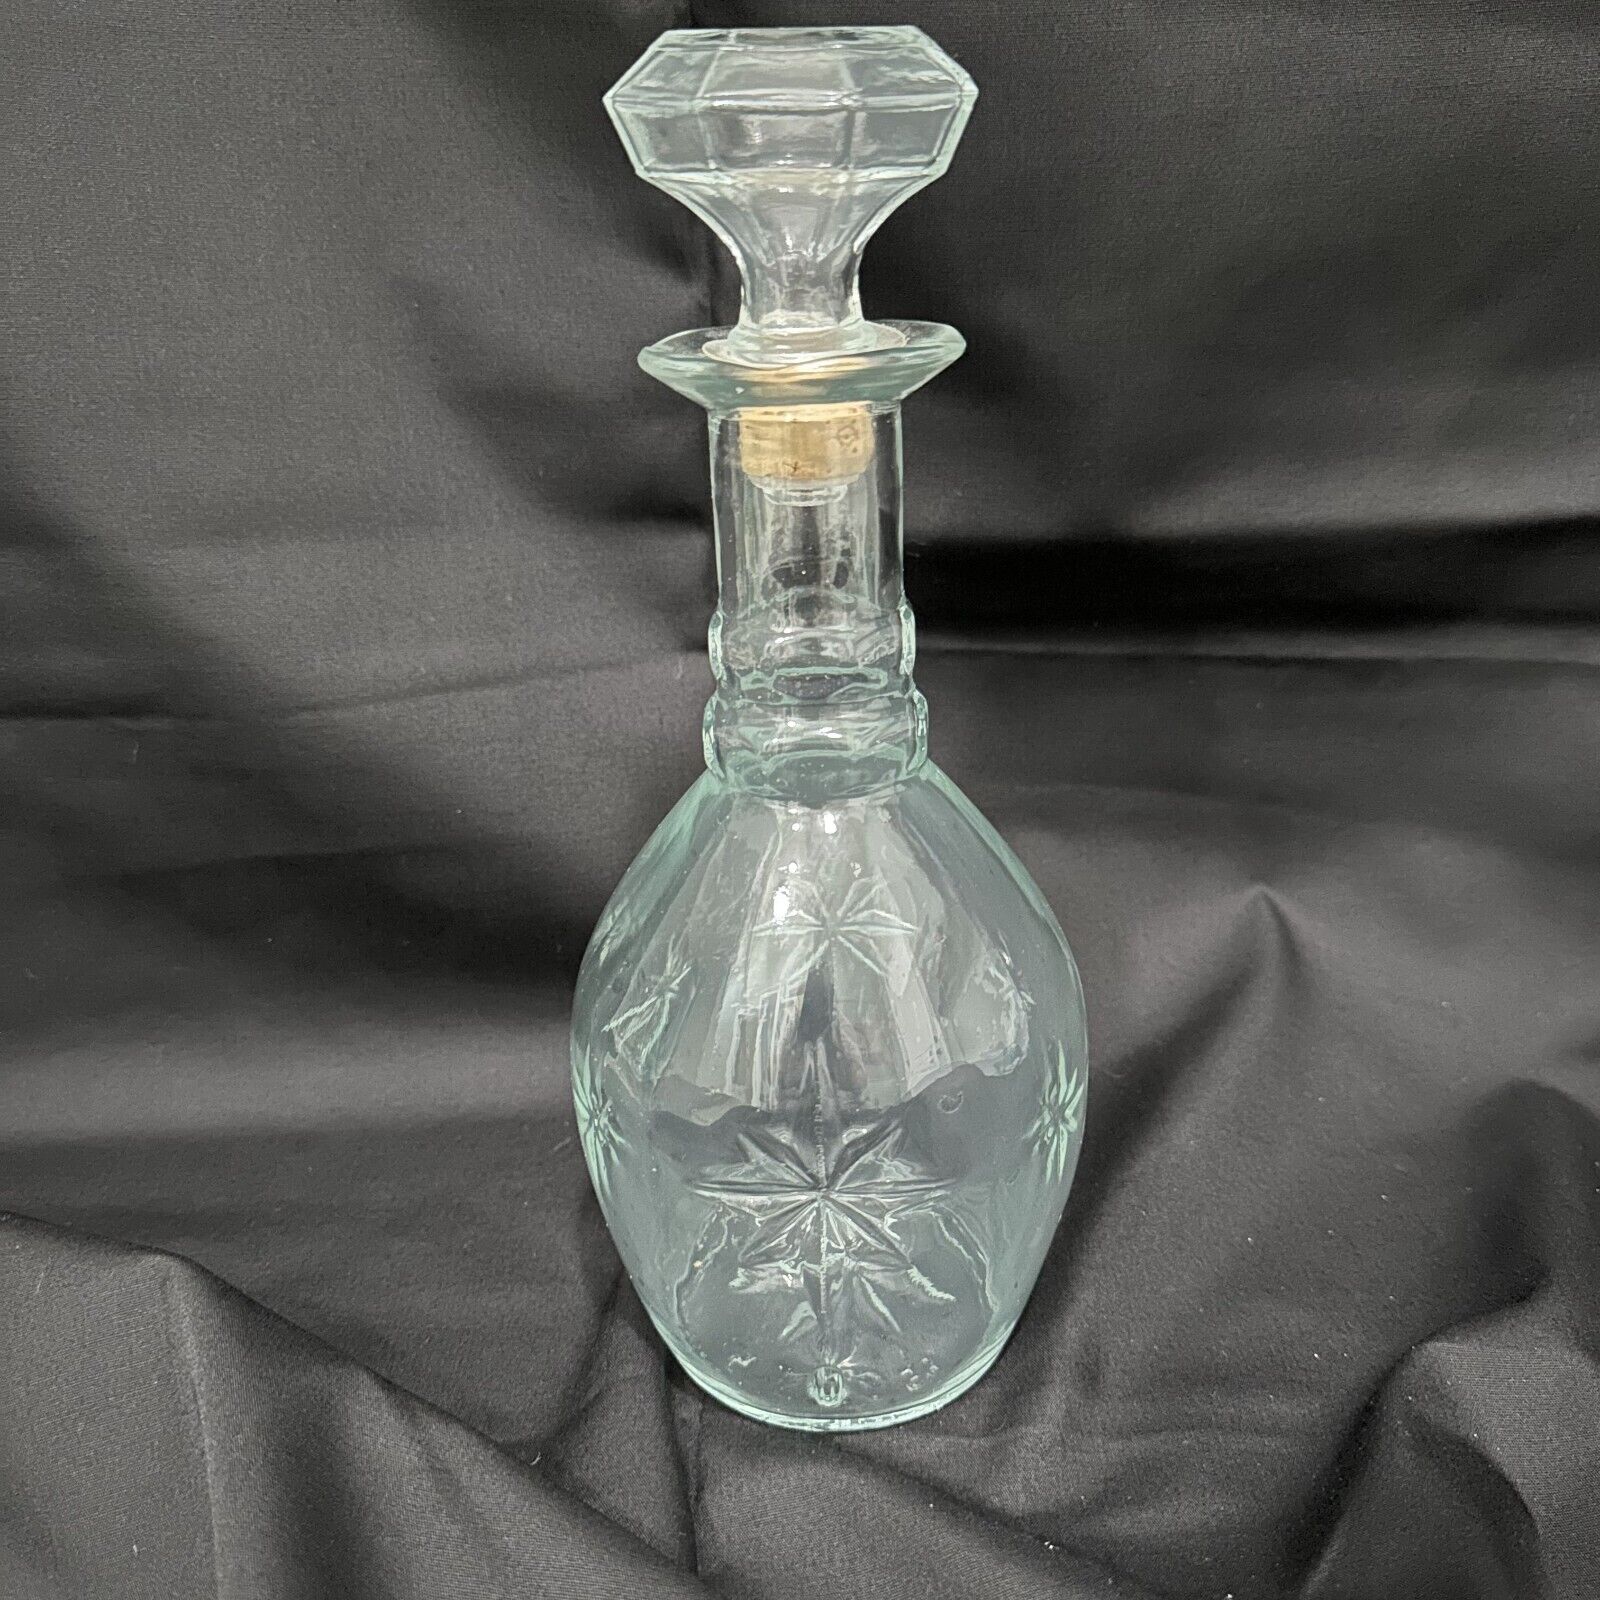 Vintage Star Burst Design Clear Glass Liquor Bottle Decanter With Cork Stopper